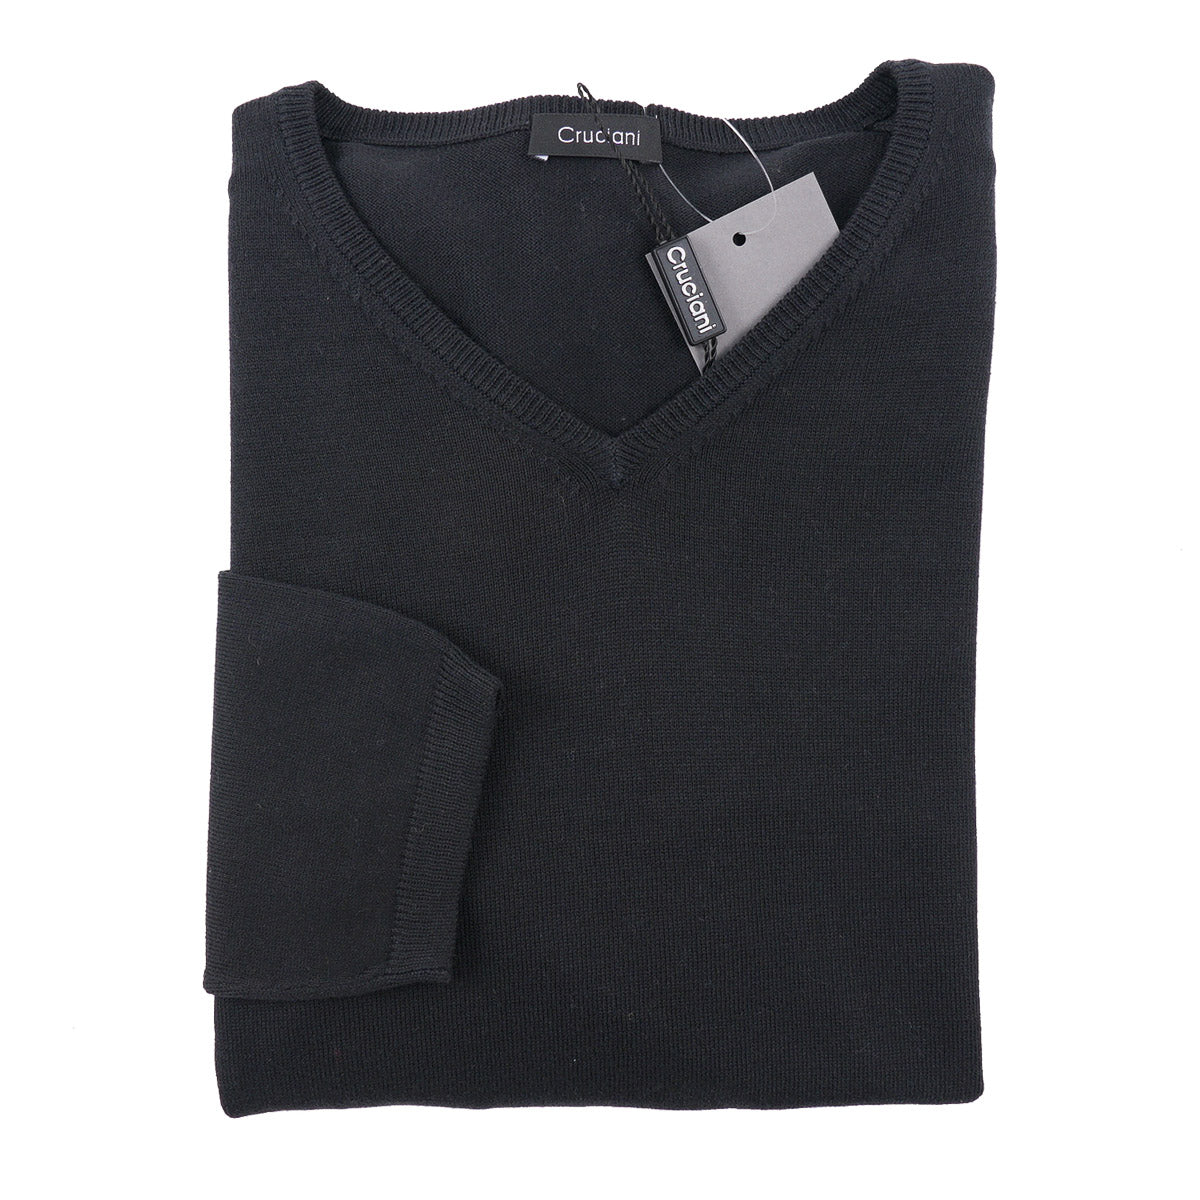 Cruciani Black Knit Cotton Sweater - Top Shelf Apparel